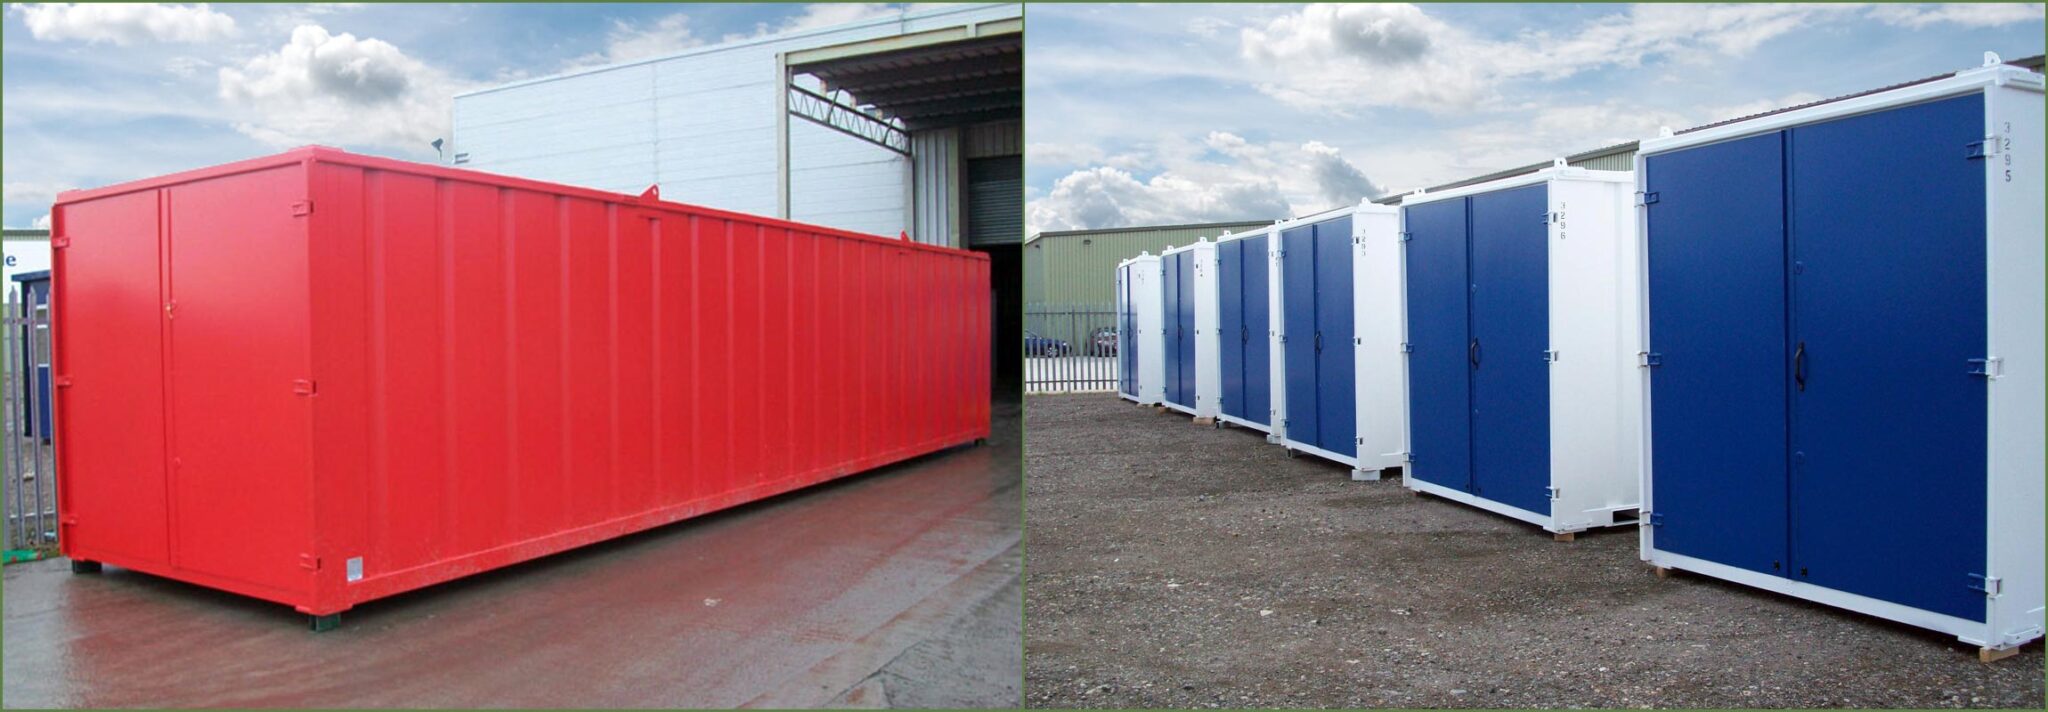 UK Providers of Anti-Vandal Storage Units